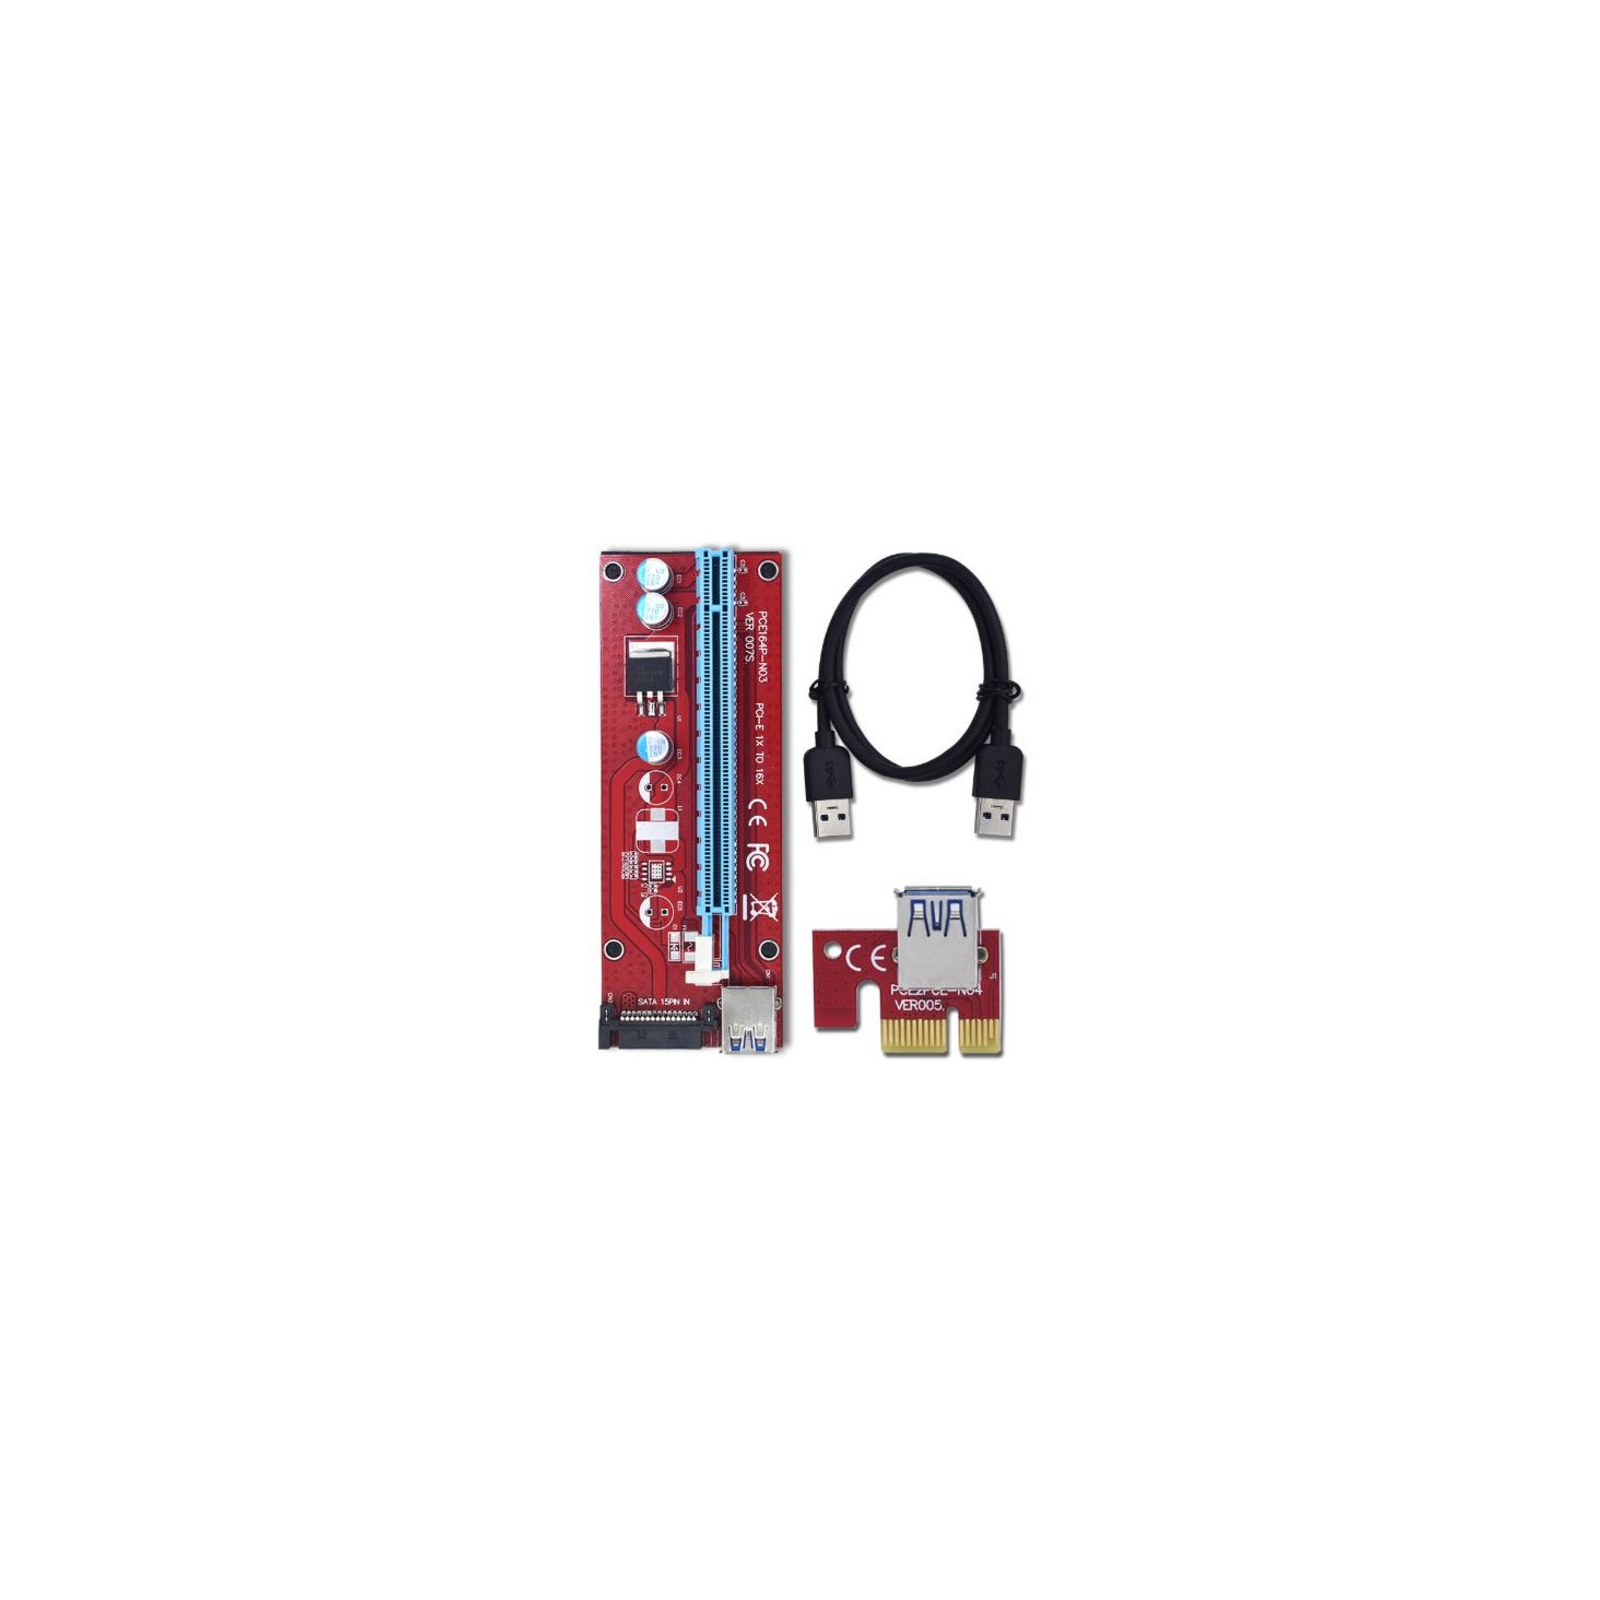 Райзер PCI-E x1 to 16x 60cm USB 3.0 Cable 15Pin SATA Power v.007S R Dynamode (RX-riser-007S 15 pin)